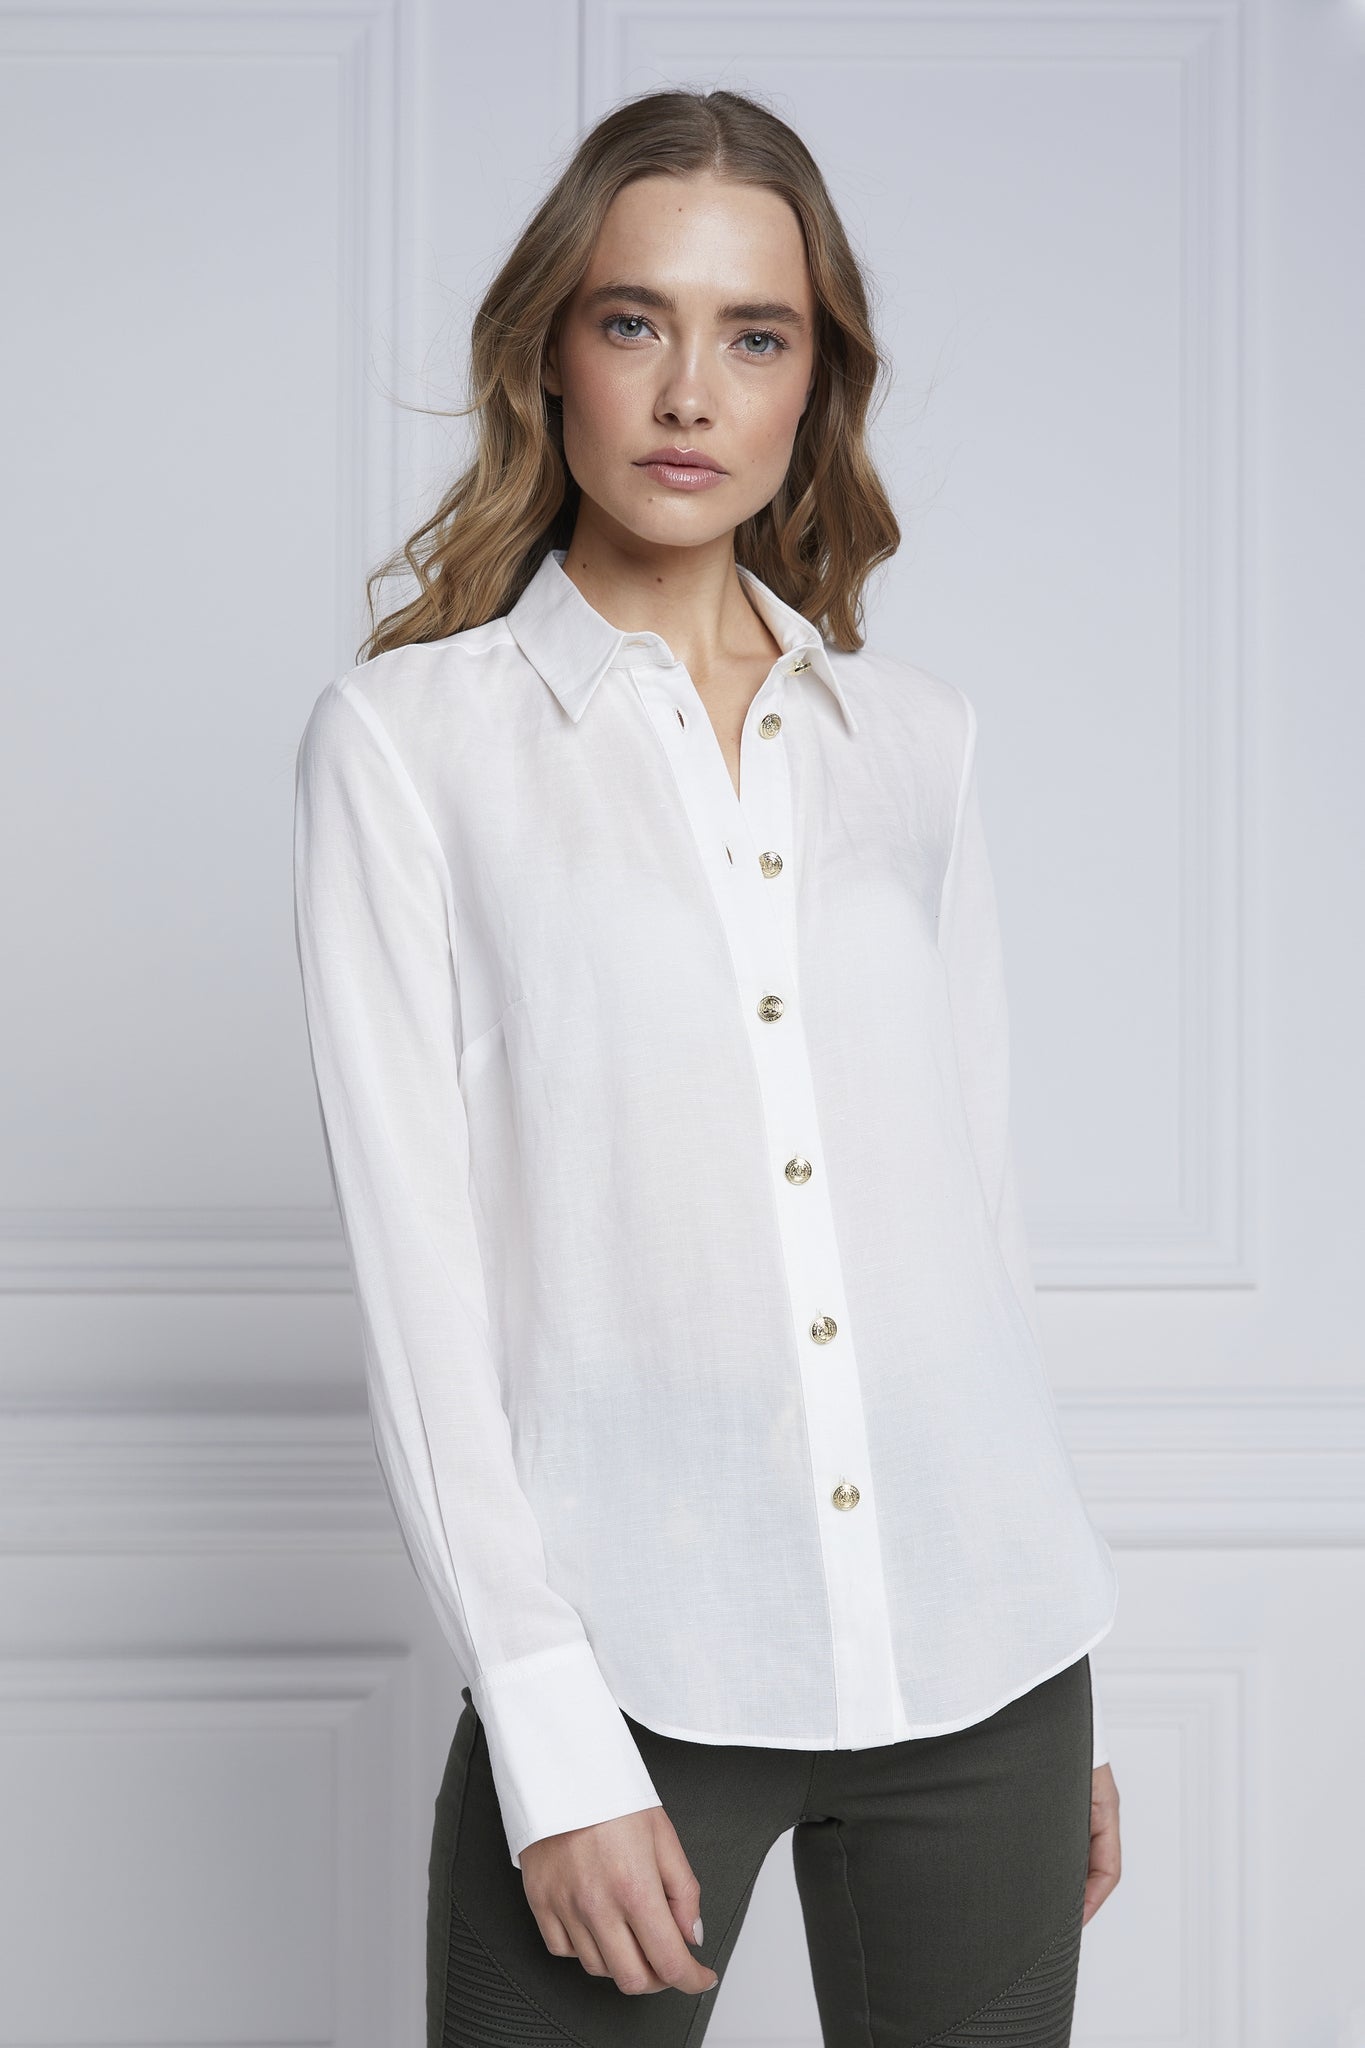 Holland Cooper Classic Ladies Shirt in White